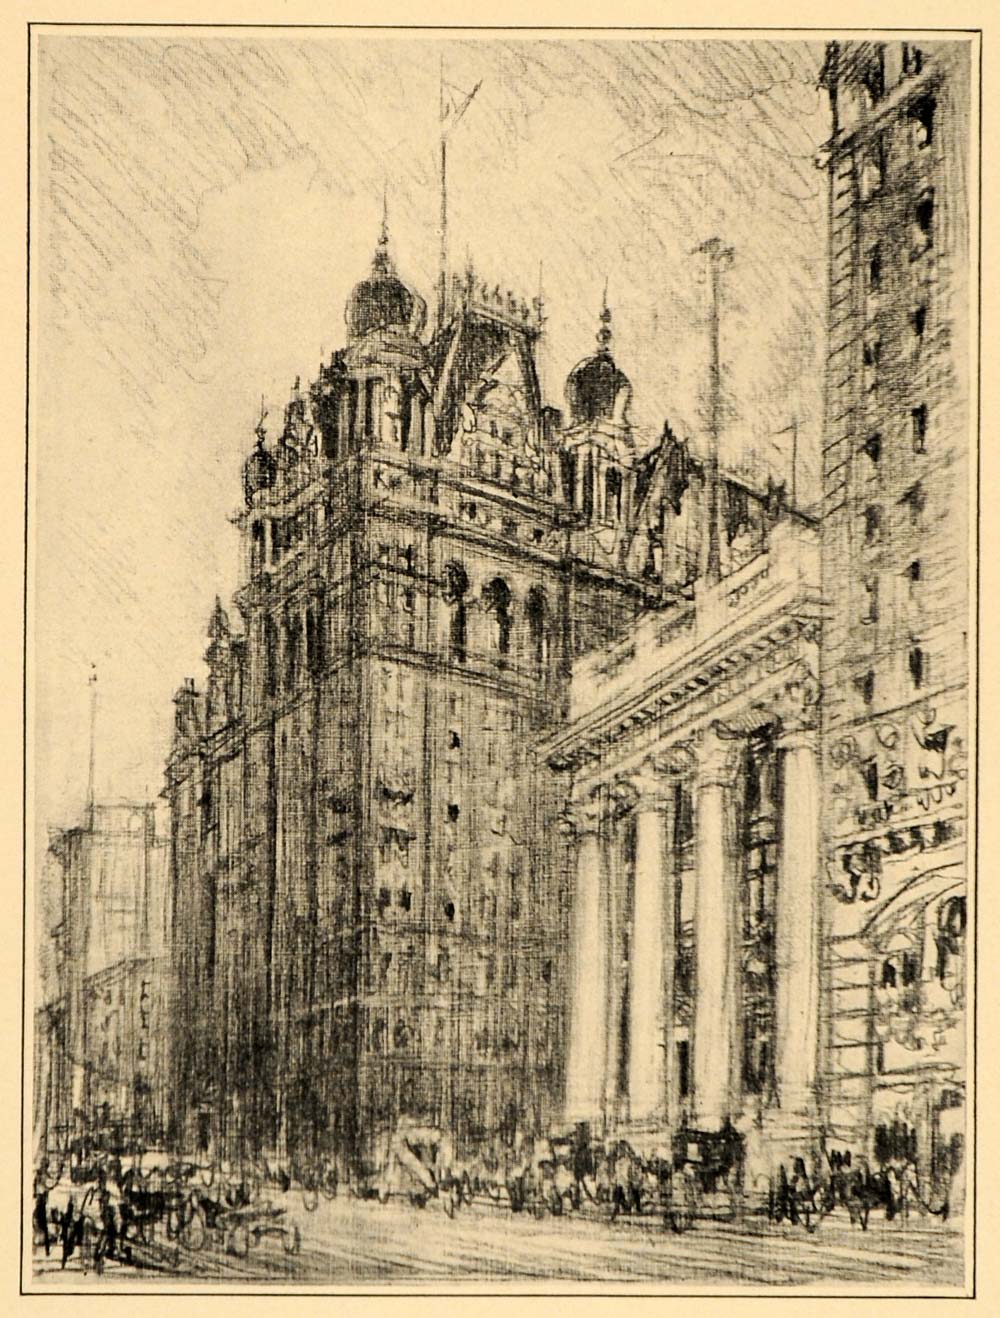 1909 Joseph Pennell Fifth Avenue 34th Street NYC Print ORIGINAL HISTORIC NY5